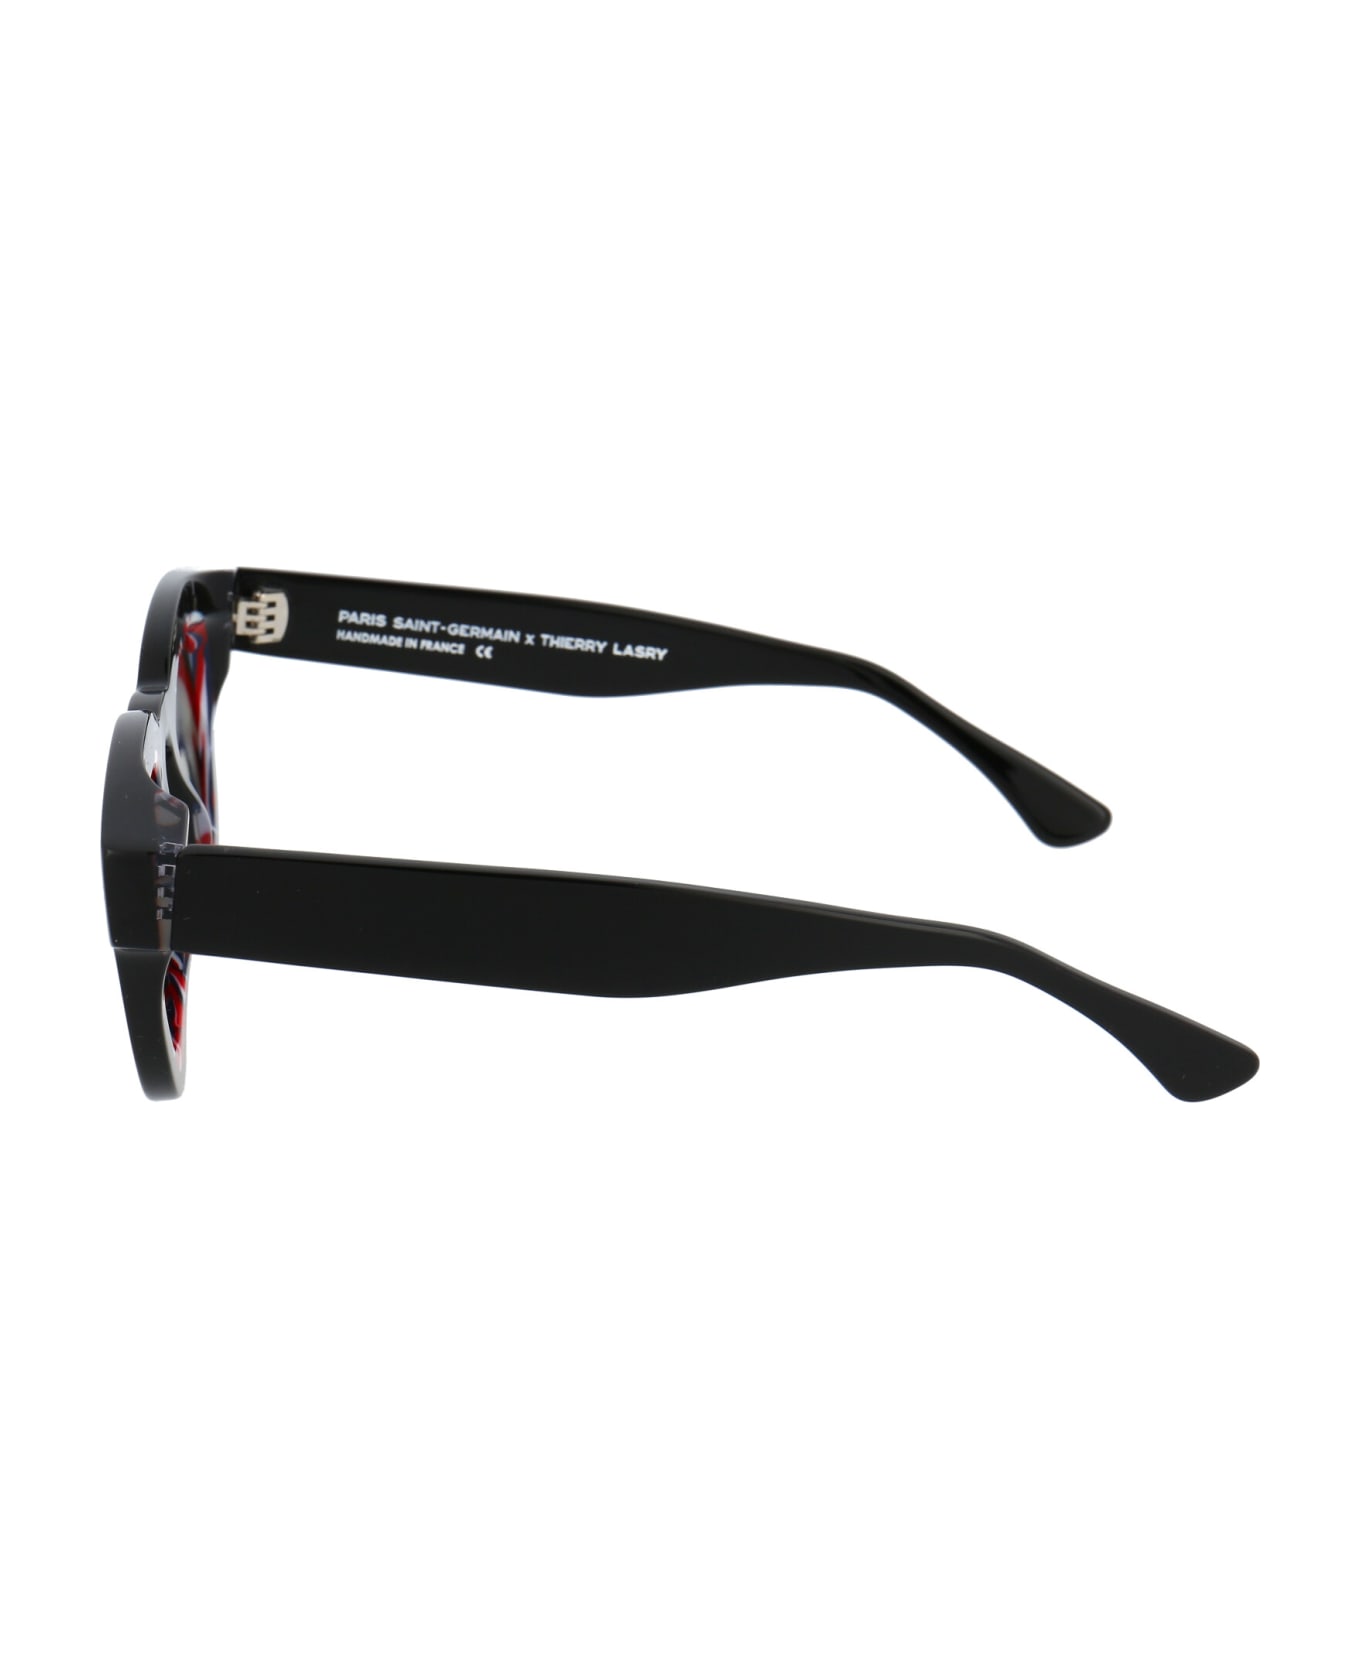 Thierry Lasry Psg X Thierry Lasry Sunglasses - 101 BLACK サングラス